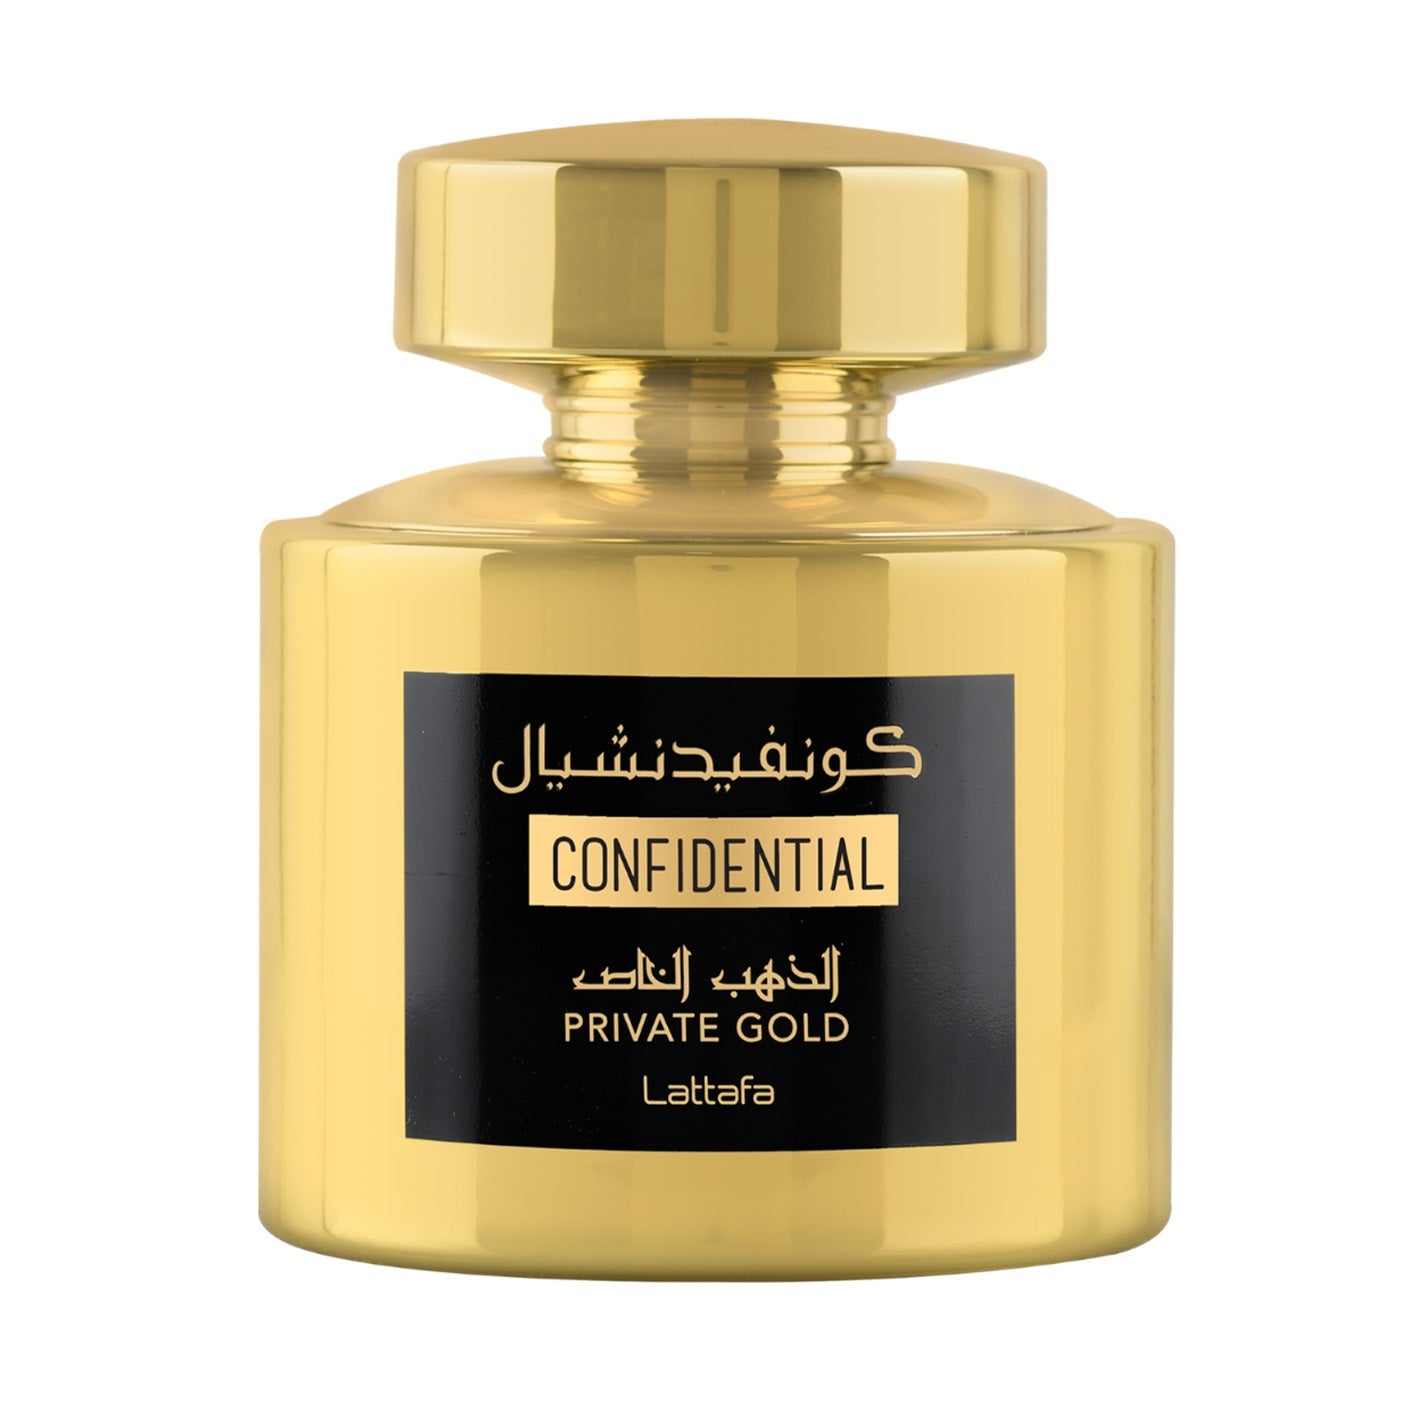 Confidential Private Gold Eau de Parfum 100ml Lattafa-almanaar Islamic Store